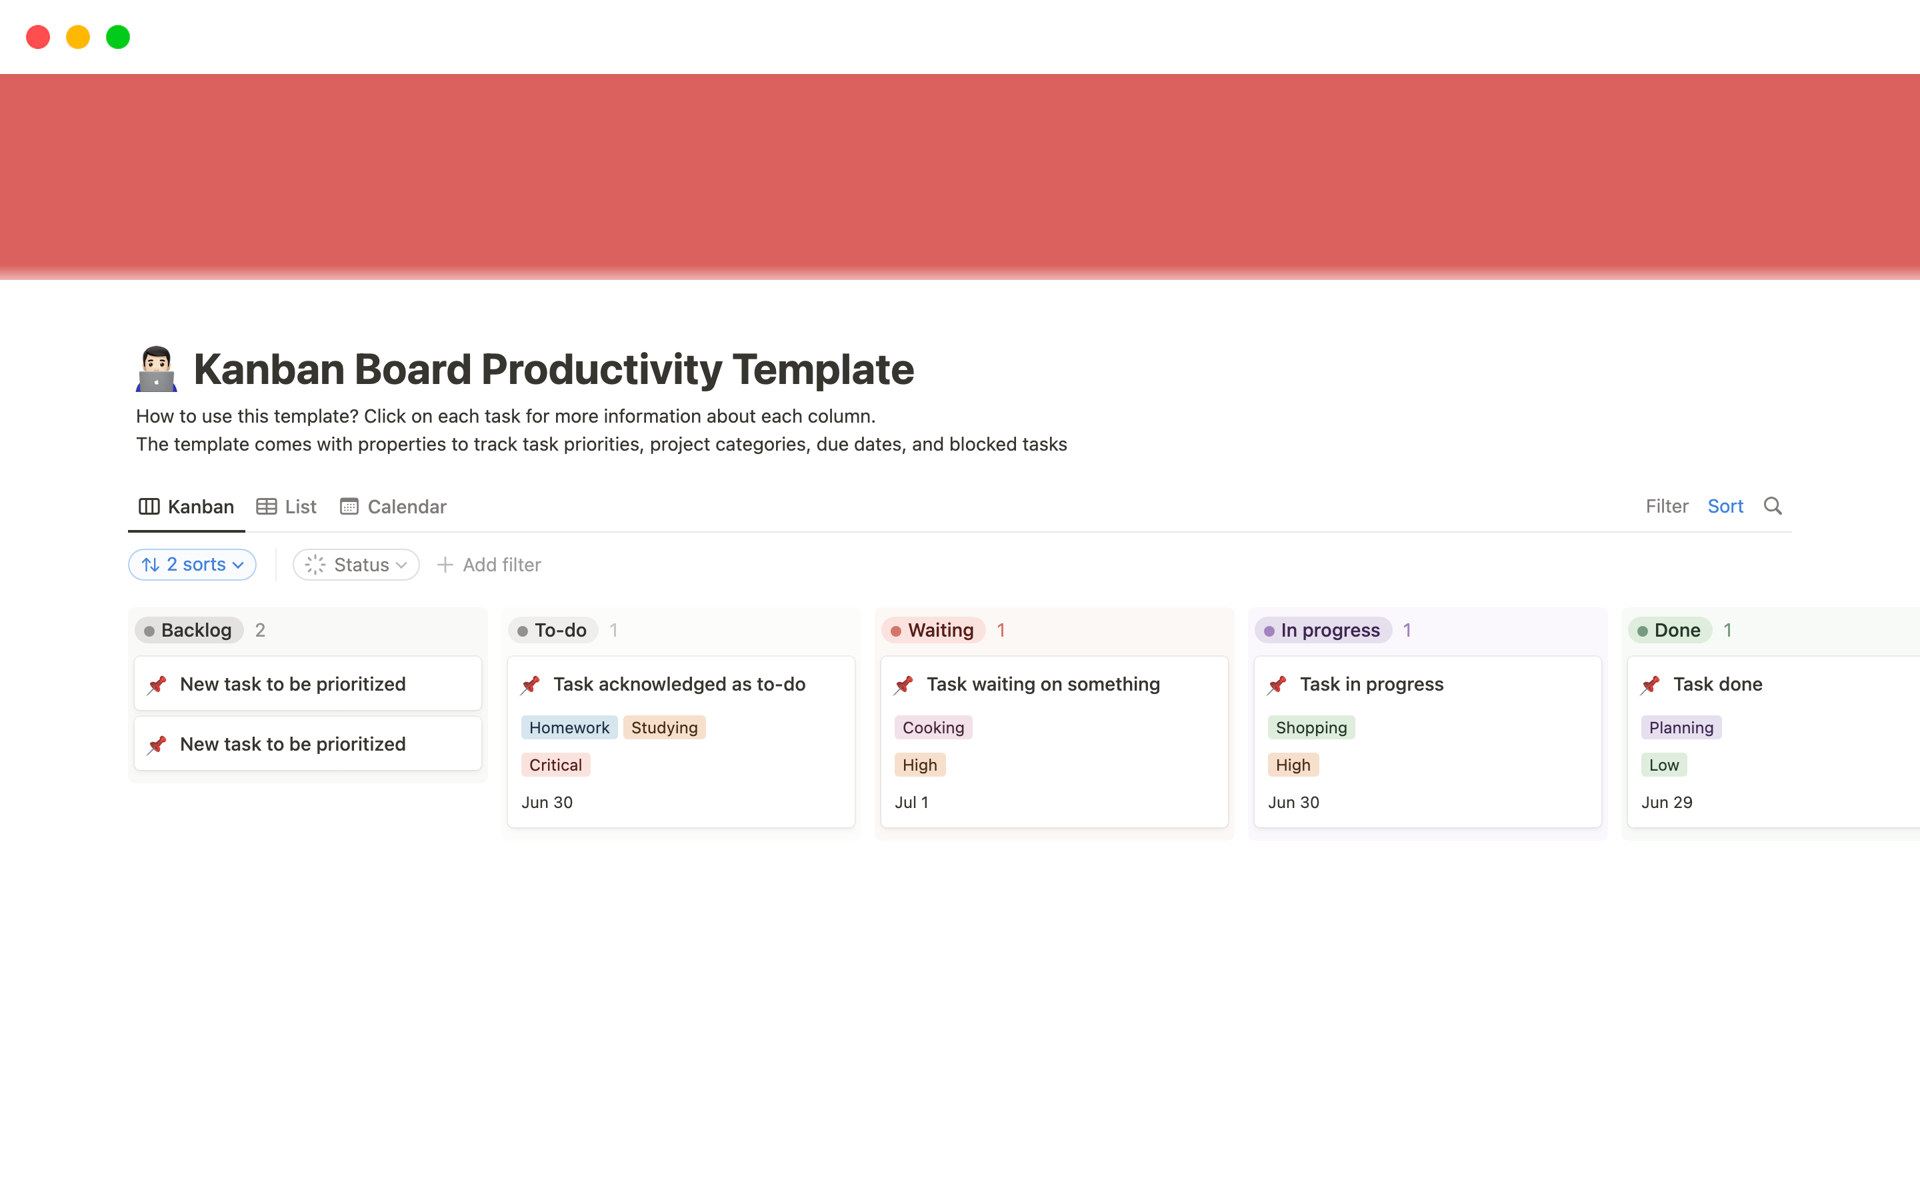 Vista previa de una plantilla para Kanban Board Productivity Template